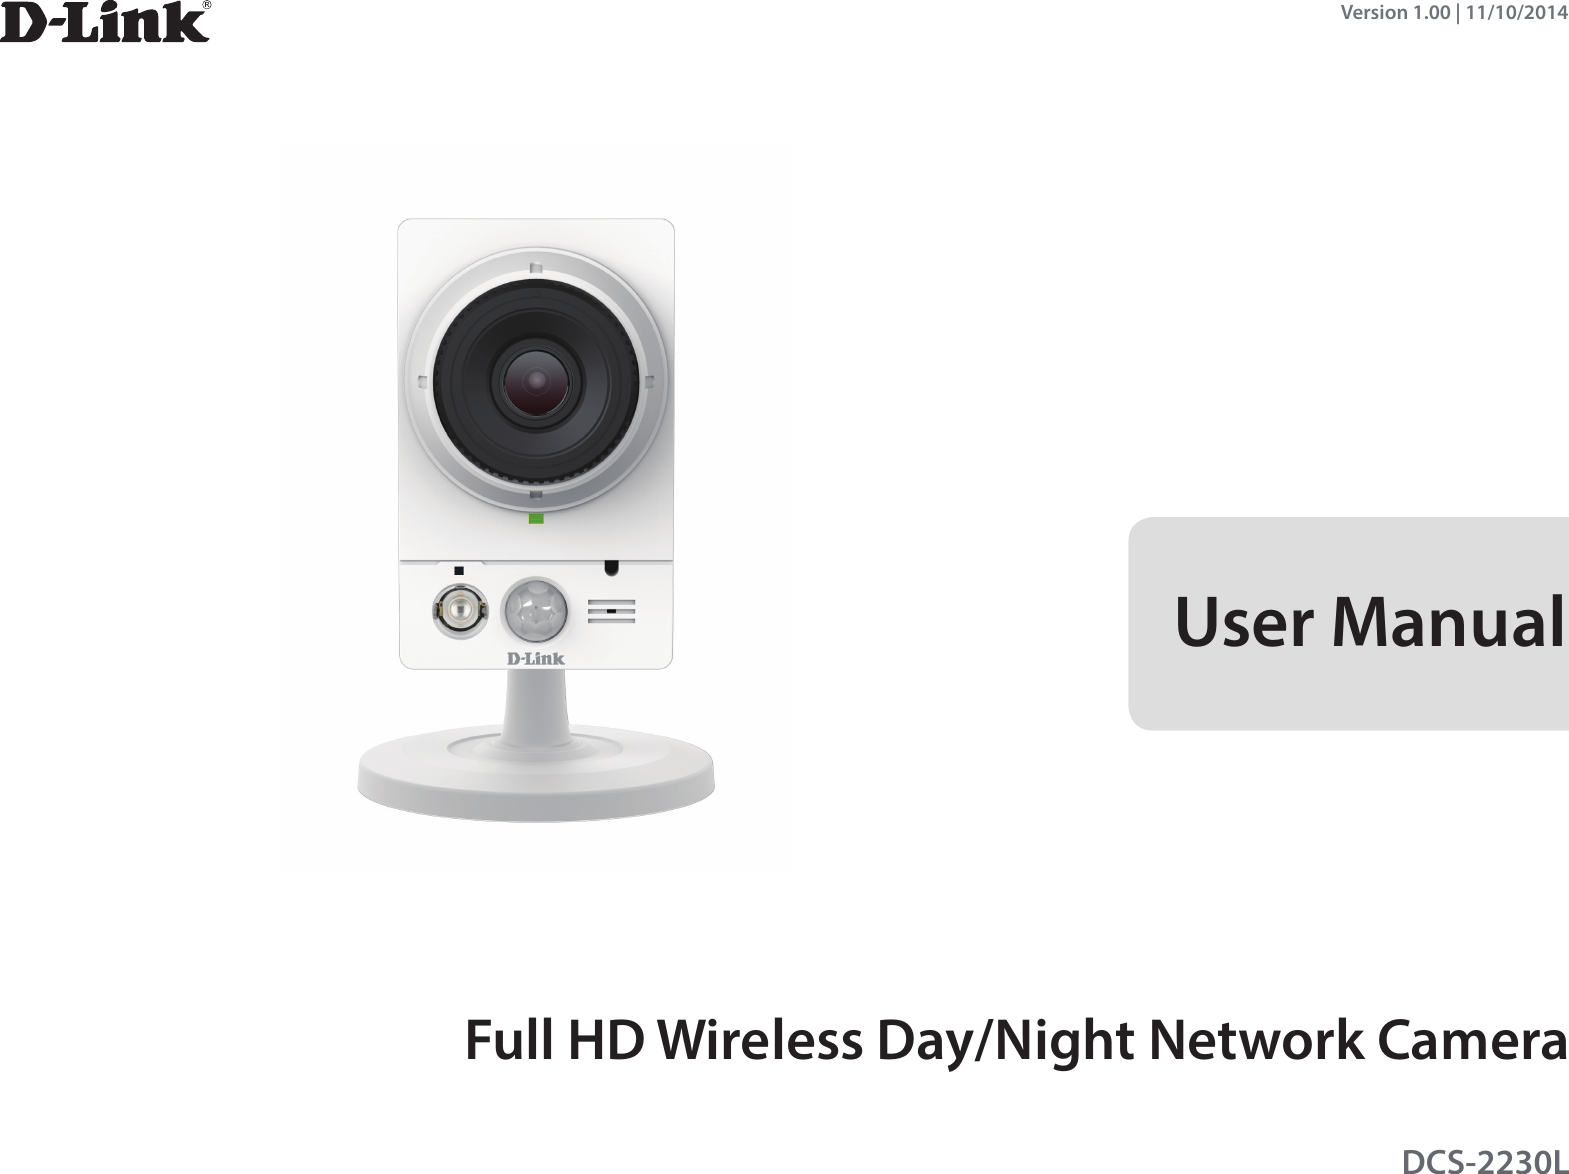 User ManualFull HD Wireless Day/Night Network CameraVersion 1.00 | 11/10/2014DCS-2230L